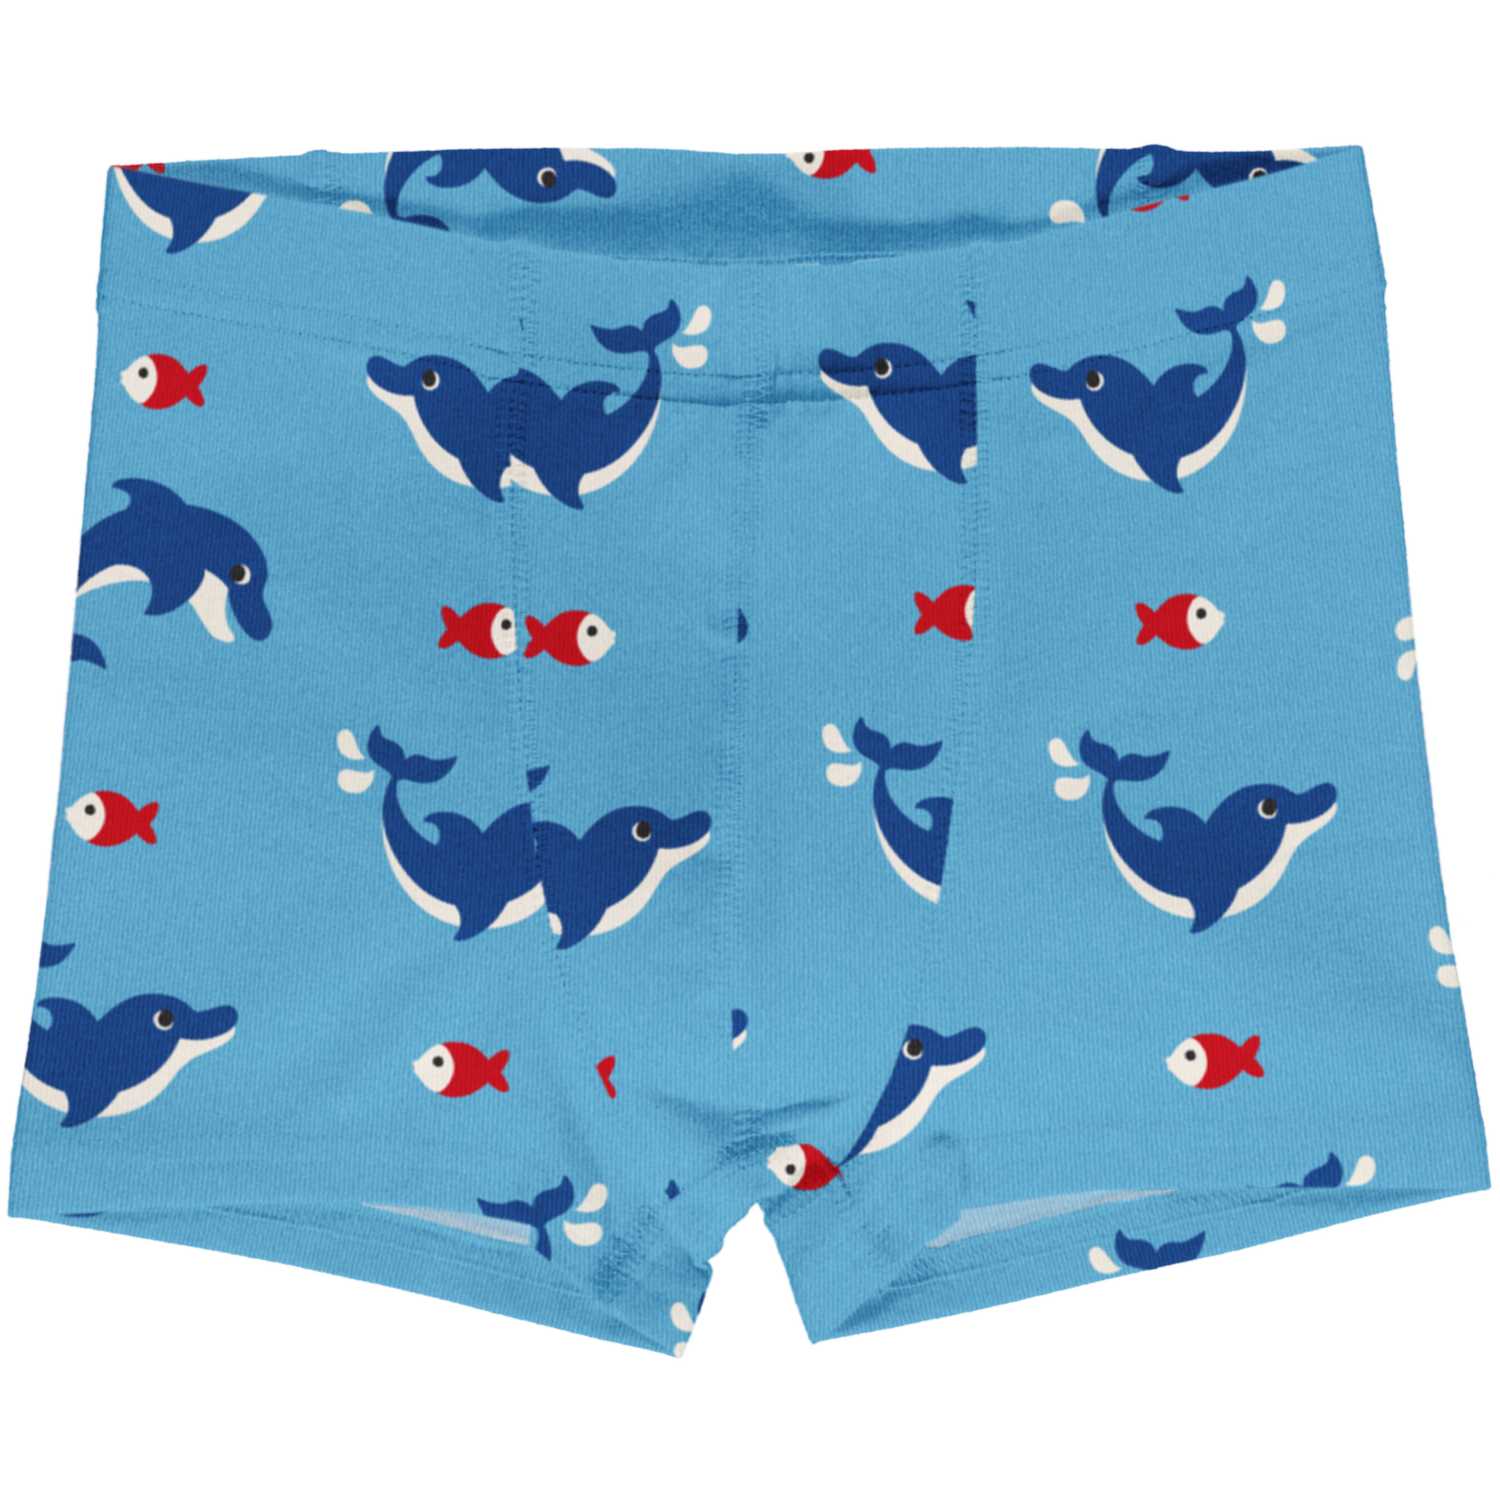 Maxomorra Dolphin Boxer Shorts Ss24 Clothing 3-4YRS / Blue,5-6YRS / Blue,7-8YRS / Blue,9-10YRS / Blue